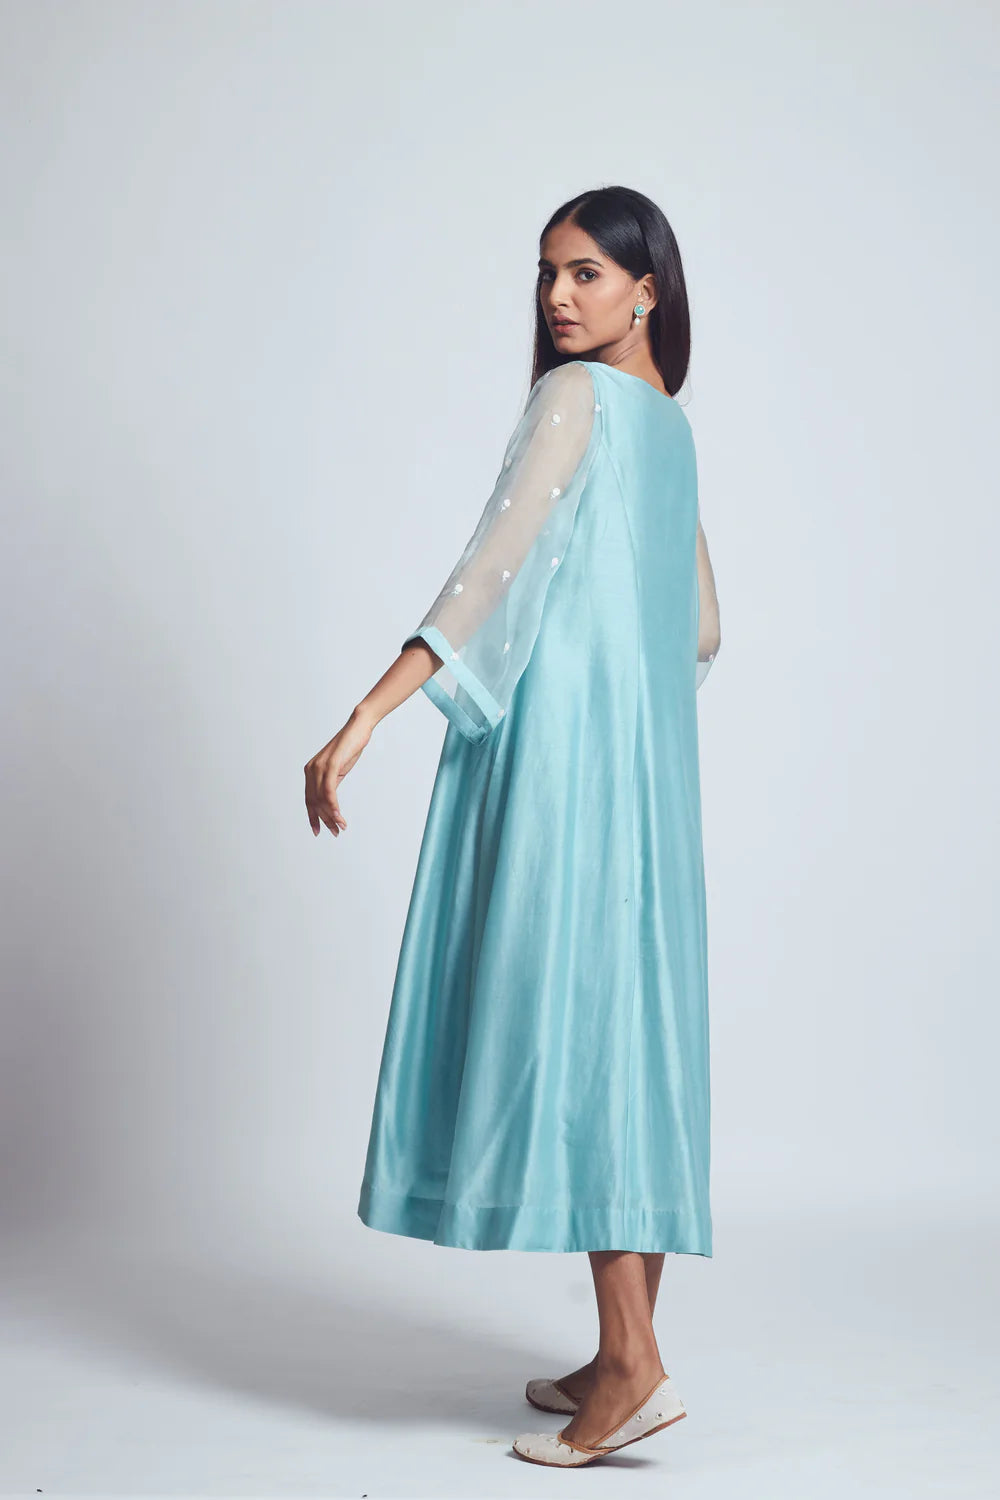 Aysa- Teal Blue Princess Cut Style Summer Dress- Ready to Ship